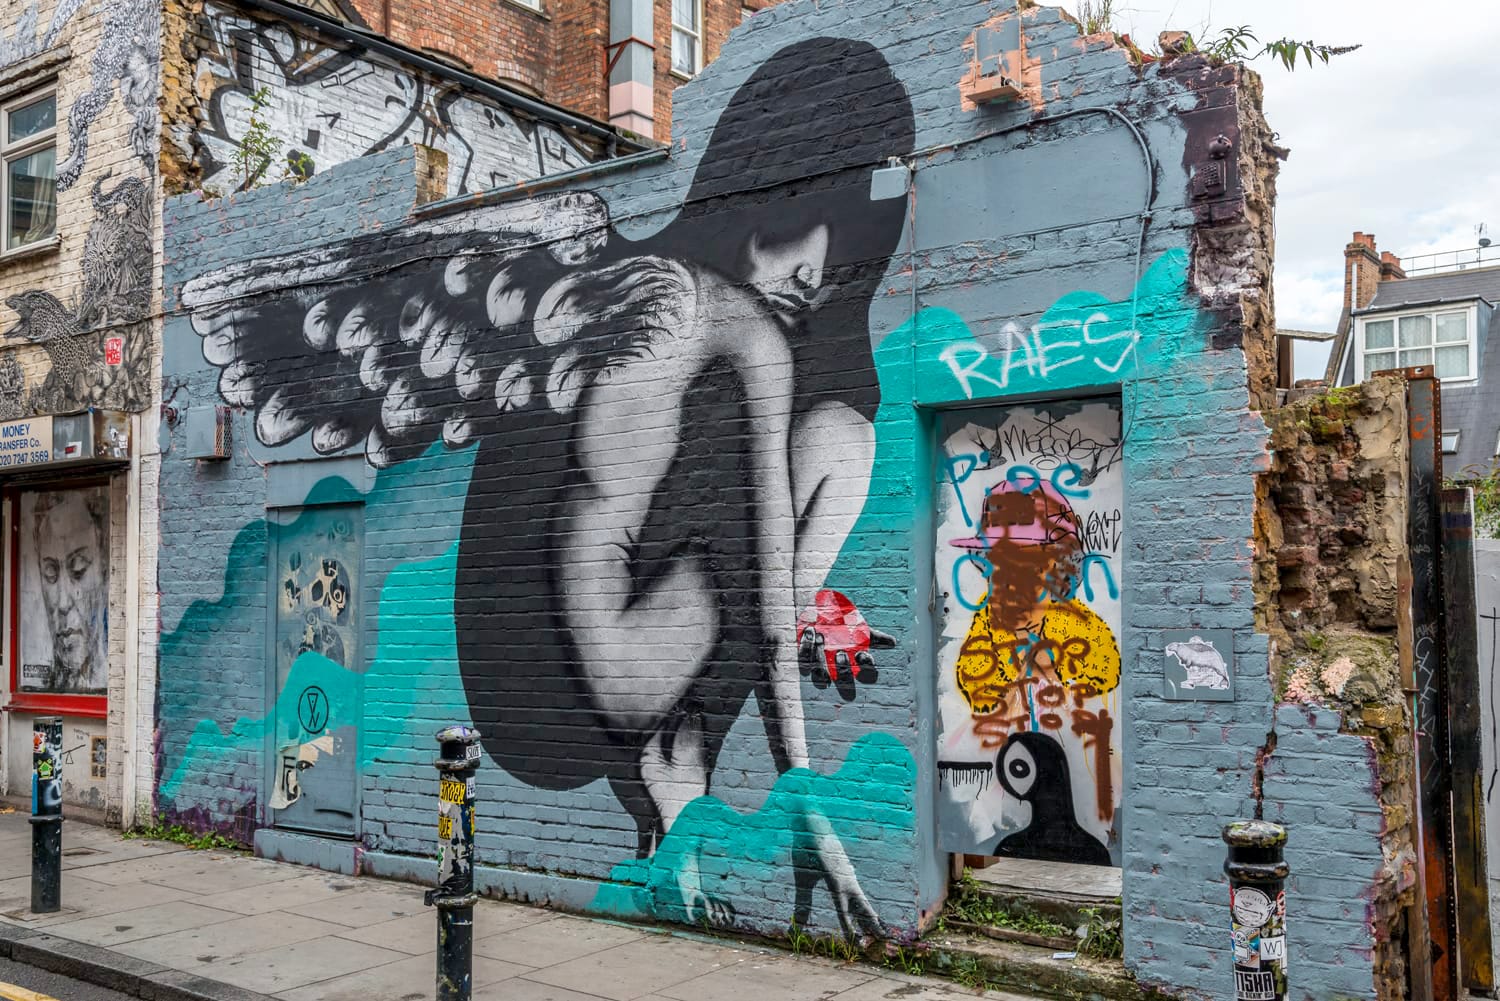 Graffiti street art in the Brick Lane area of central London in the UK.